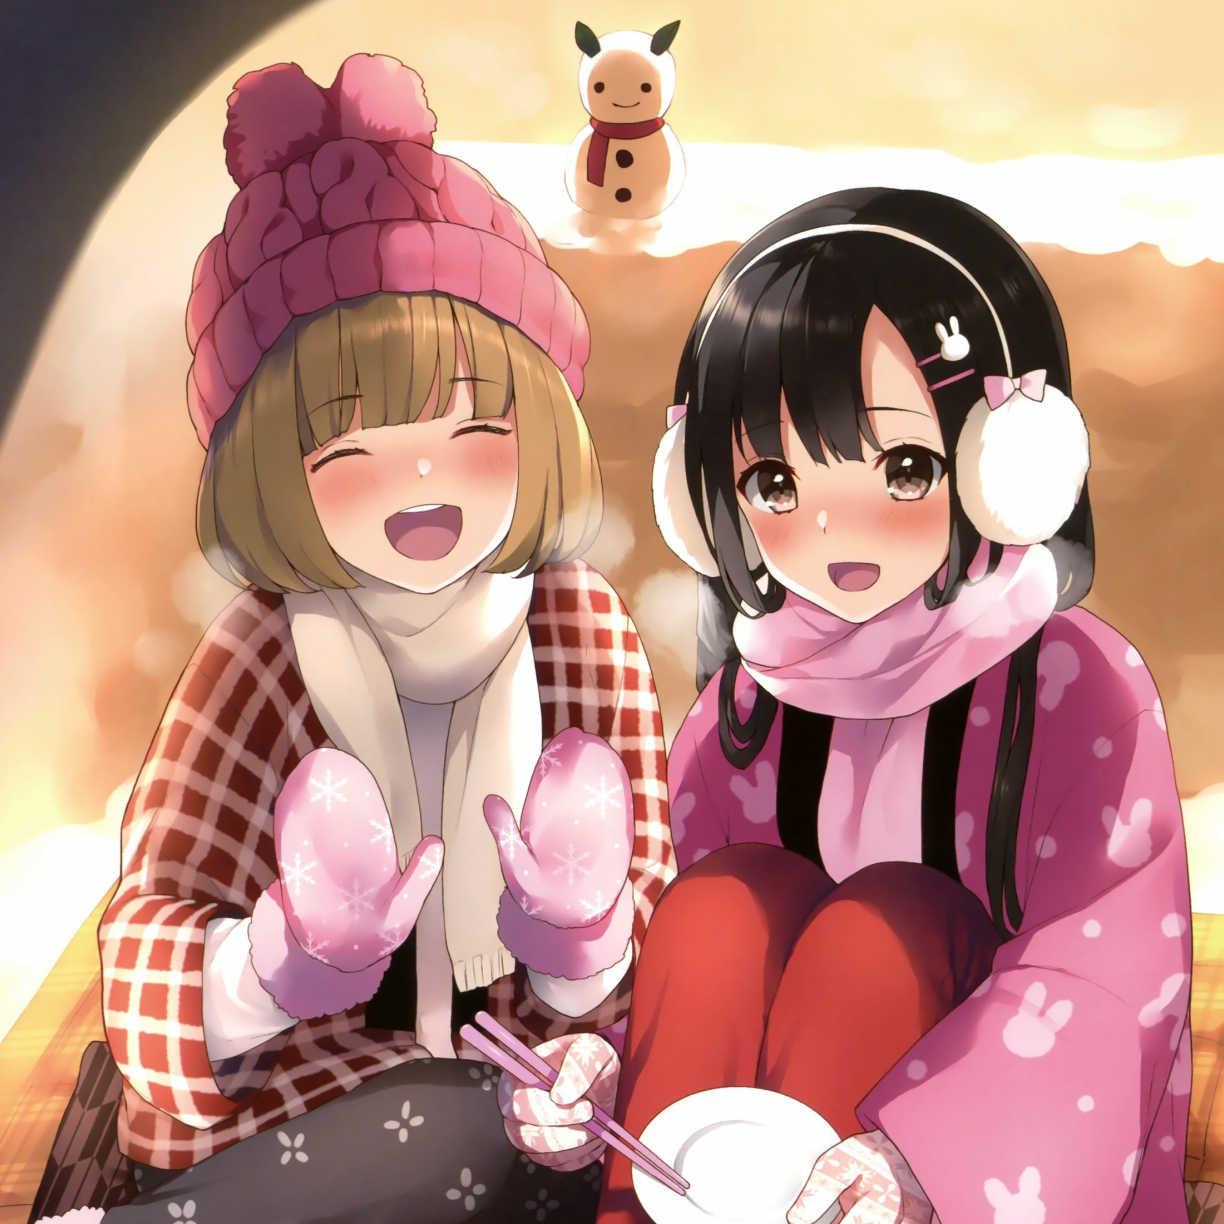 Wallpaper winter, cute anime girls, friends desktop wallpaper, hd image,  picture, background, 69b11f | wallpapersmug